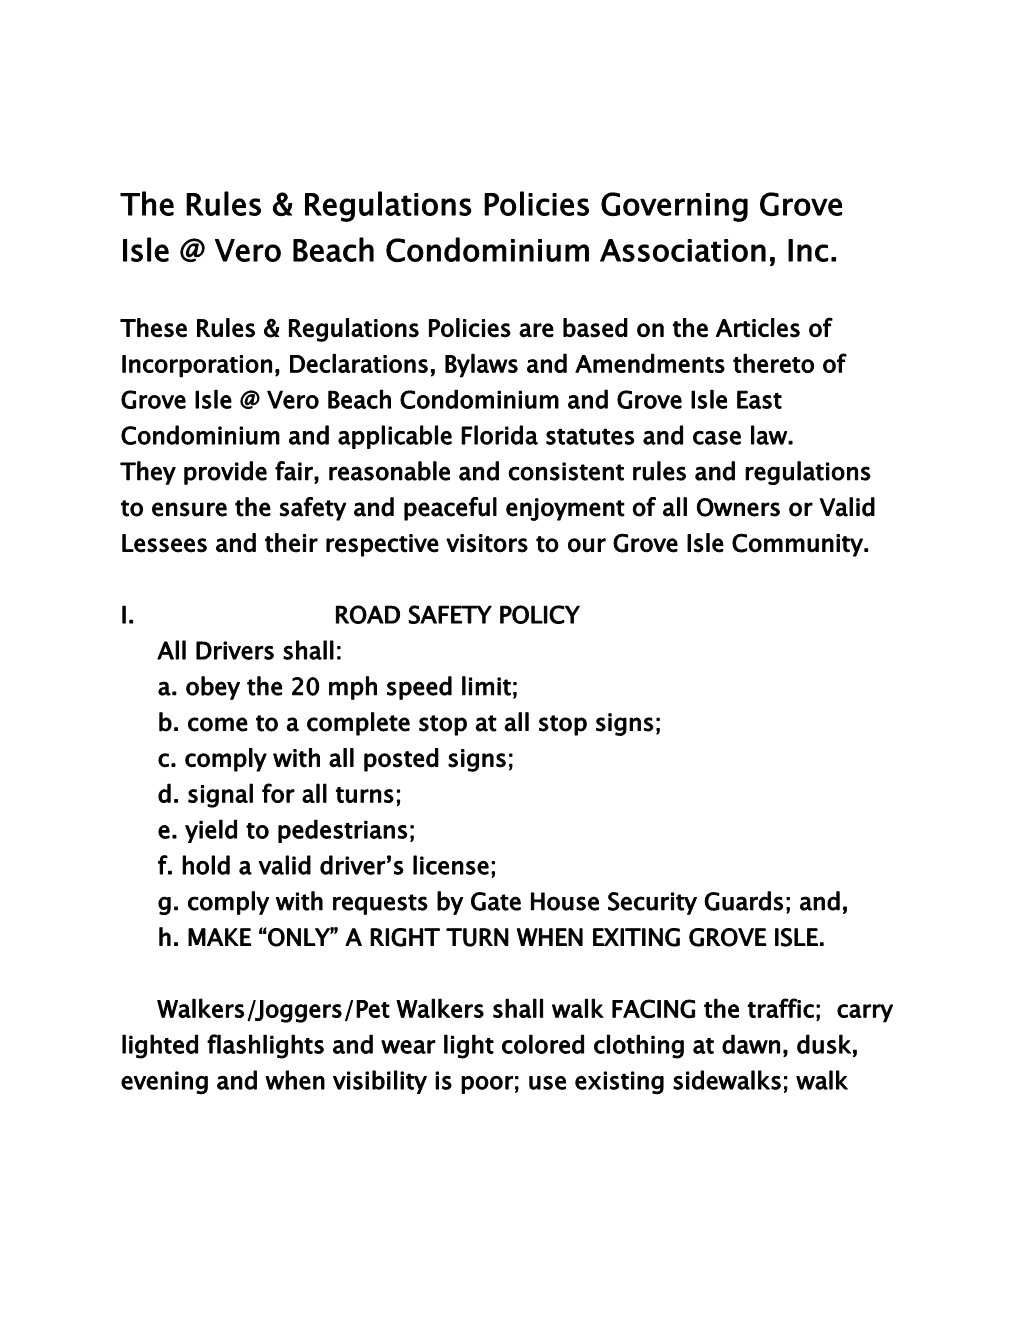 The Rules & Regulations Policies Governing Grove Isle Vero Beach Condominium Association, Inc